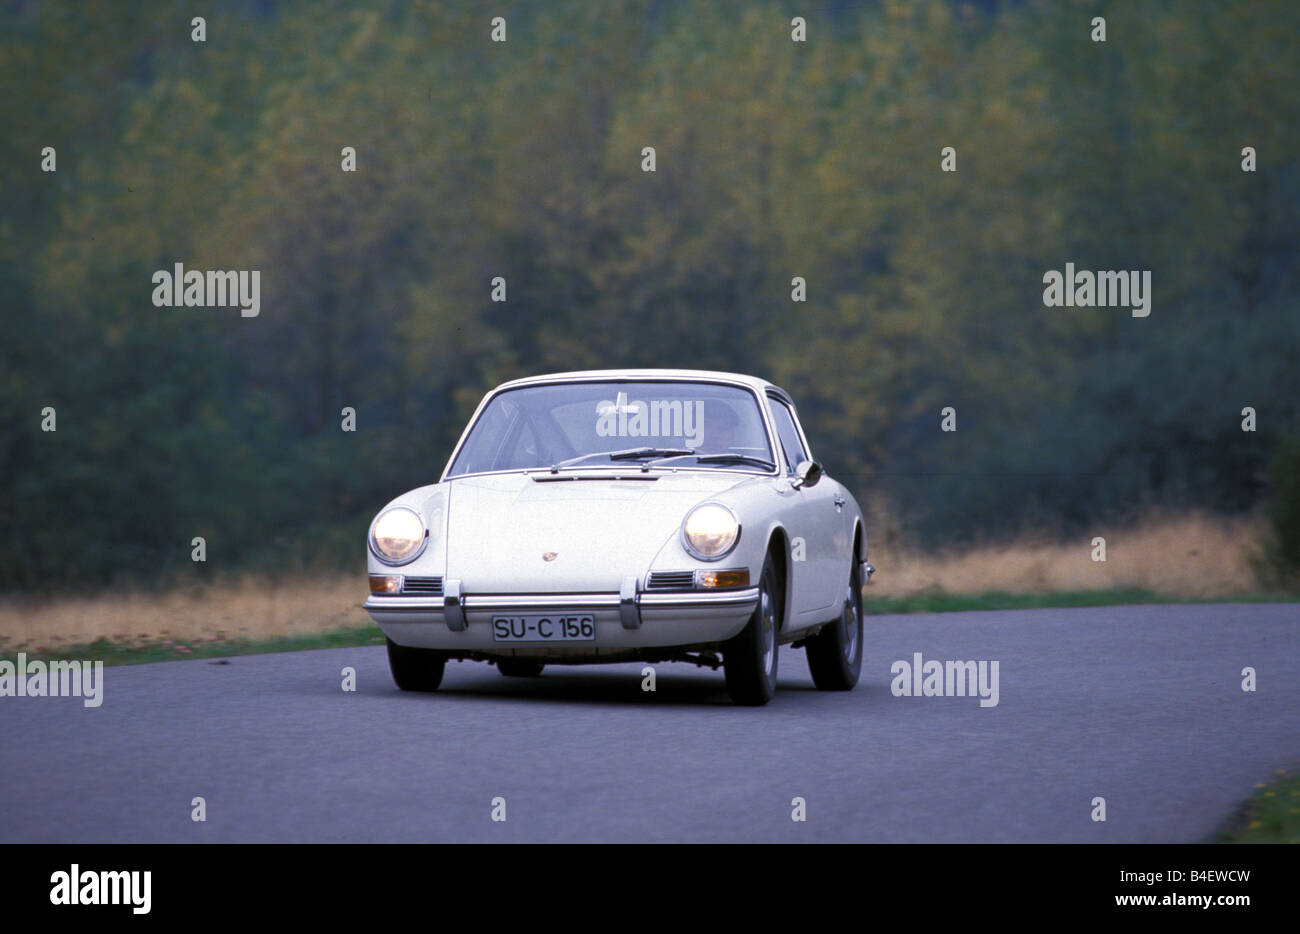 Car, Porsche 911, sports car, Coupé, Coupe, model year 1964, vintage car, 1960s, sixties, white, driving, diagonal front, front Stock Photo